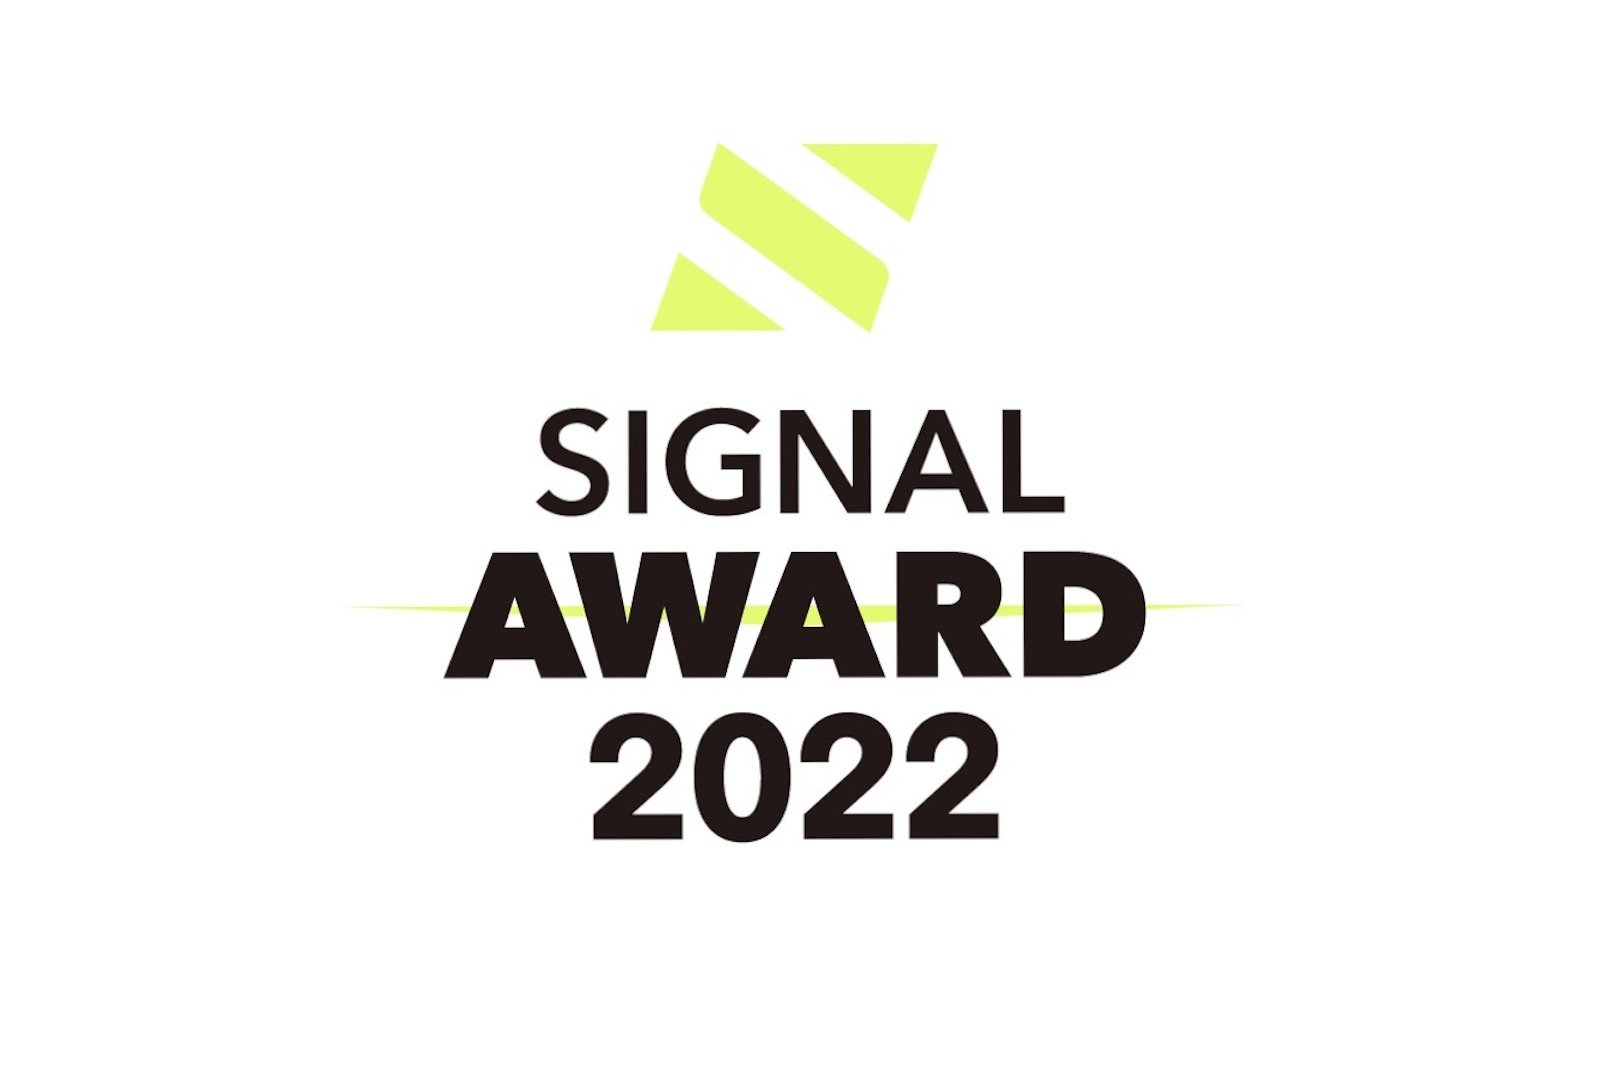 「SIGNAL AWARD 2022」は4月26日に開催